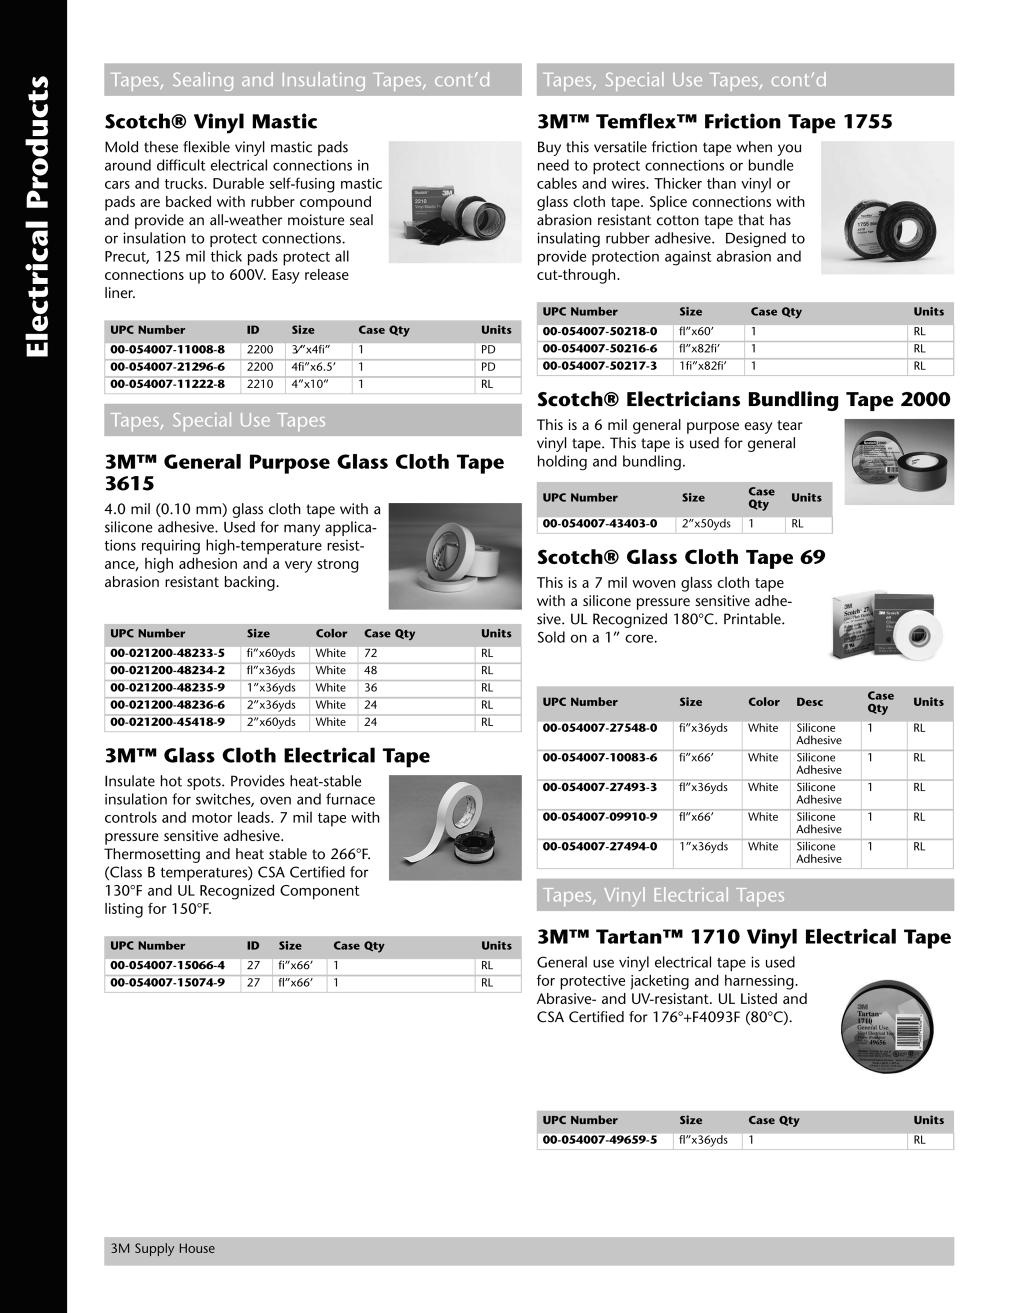 Thomas & Betts TK221SC-1 1/2-Inch Electrical Metallic Tubing Set Screw Coupling TV Non-Branded Items Home Improvement 